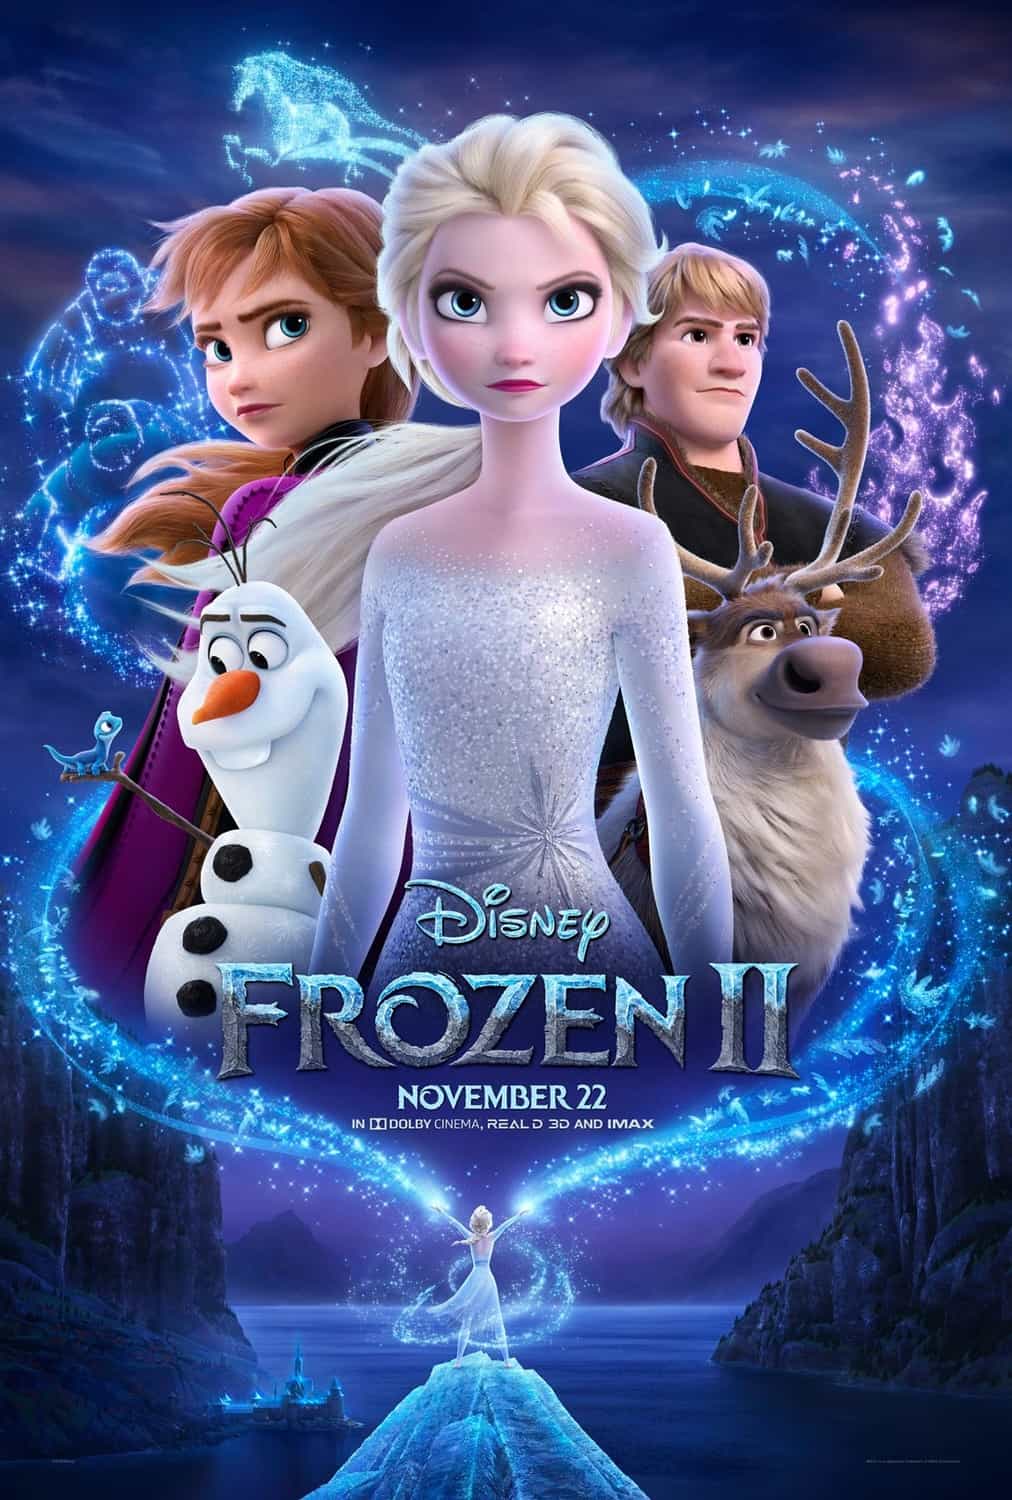 Disney release second trailer for November 22nd 2019 release Frozen II